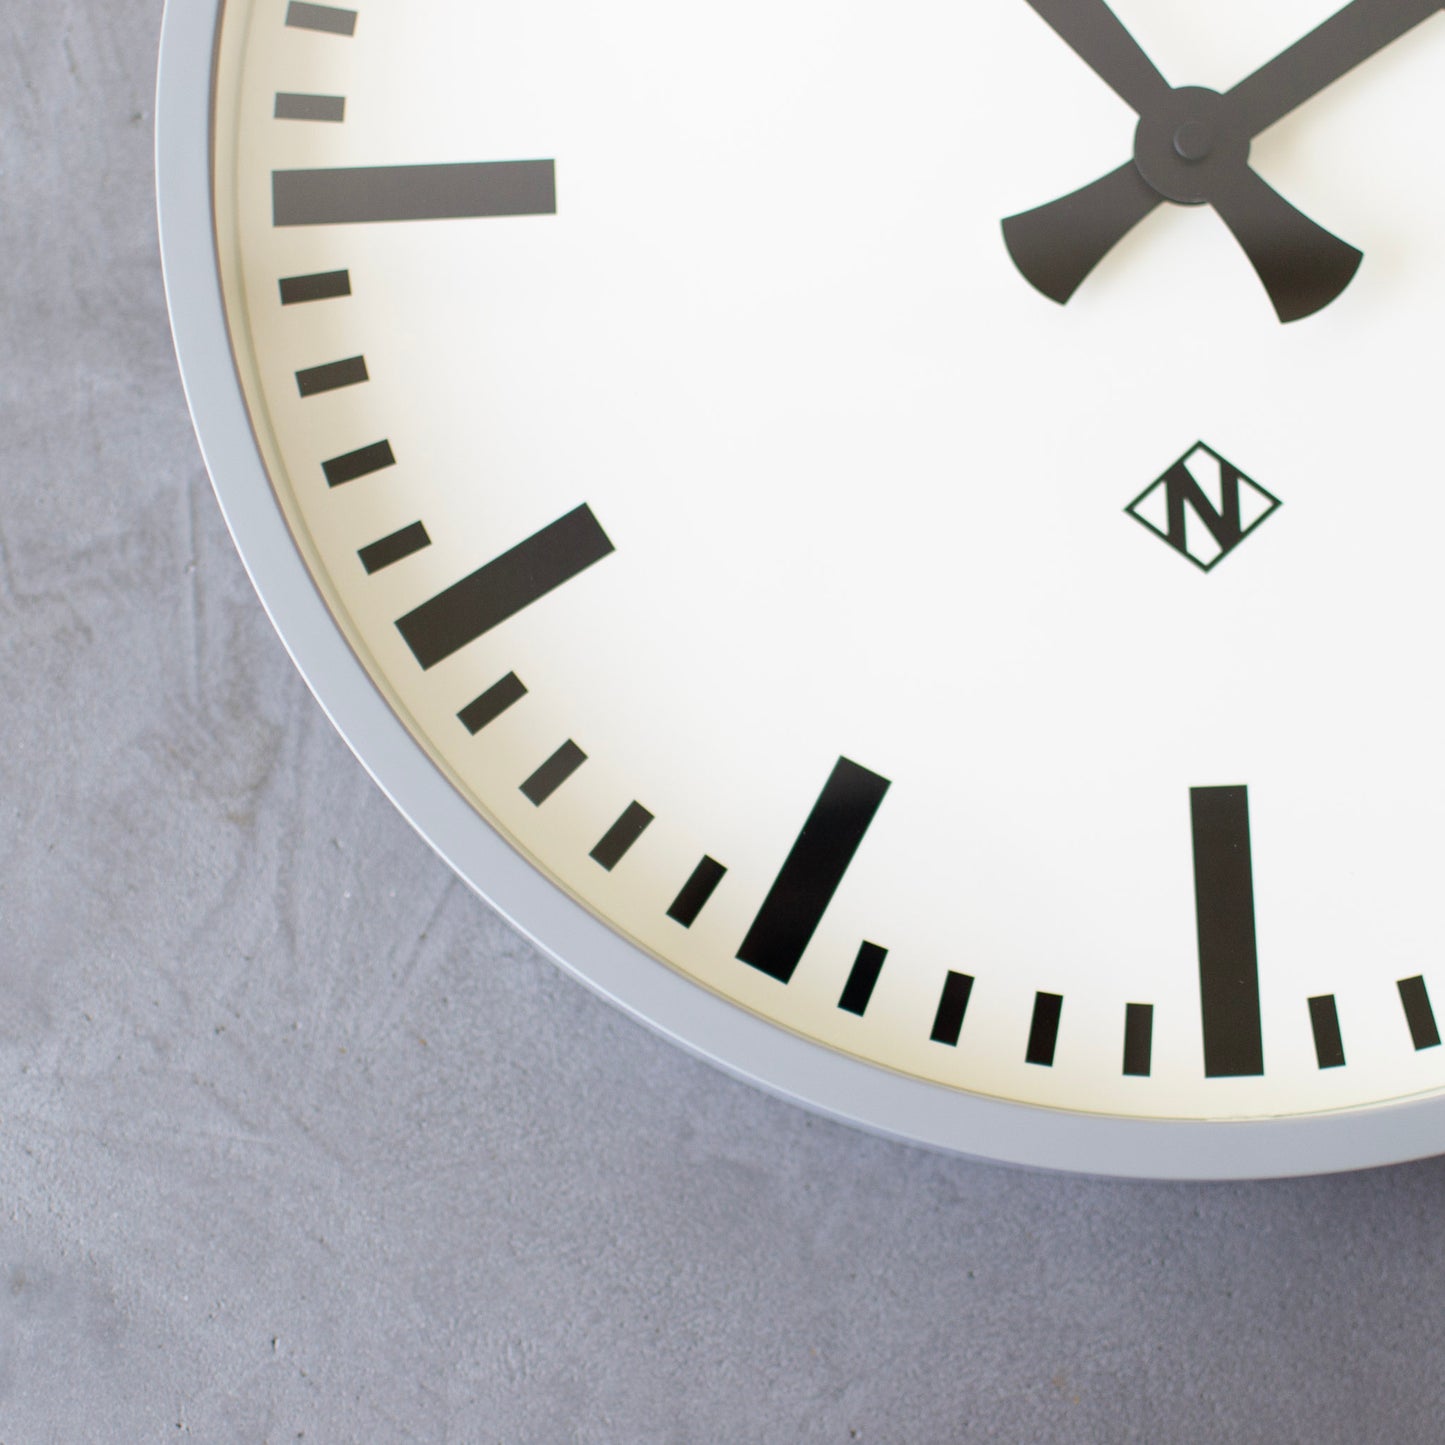 【NEWGATE】Number Three clock − Railway Clock Posh Grey